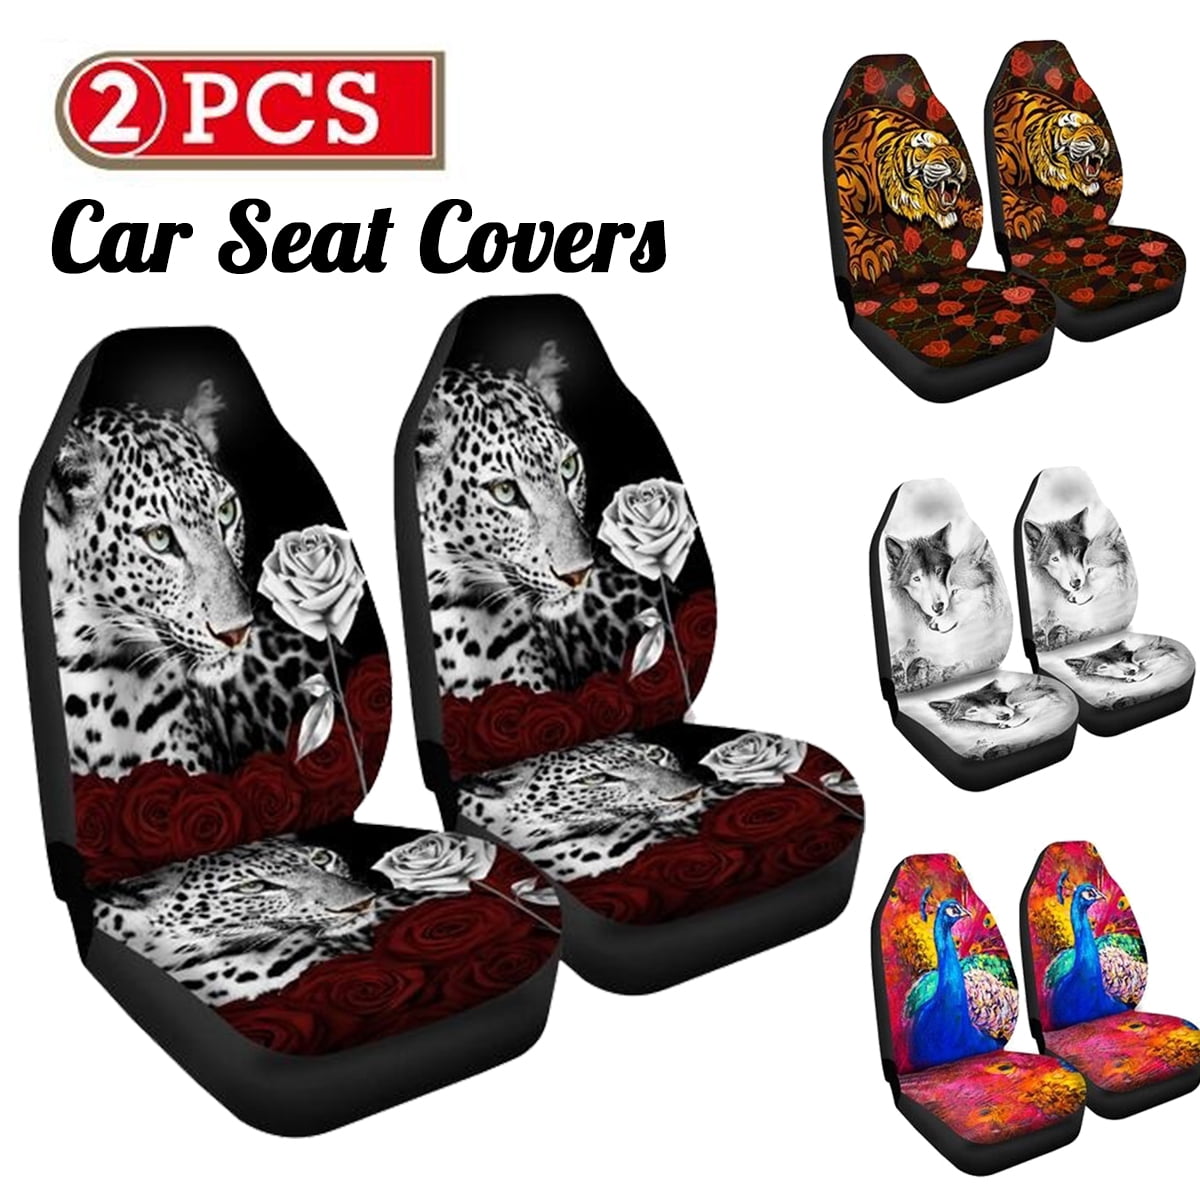 2Pcs/Set Animal Print Car Front Seat Cover Leopard Tiger Print Seat